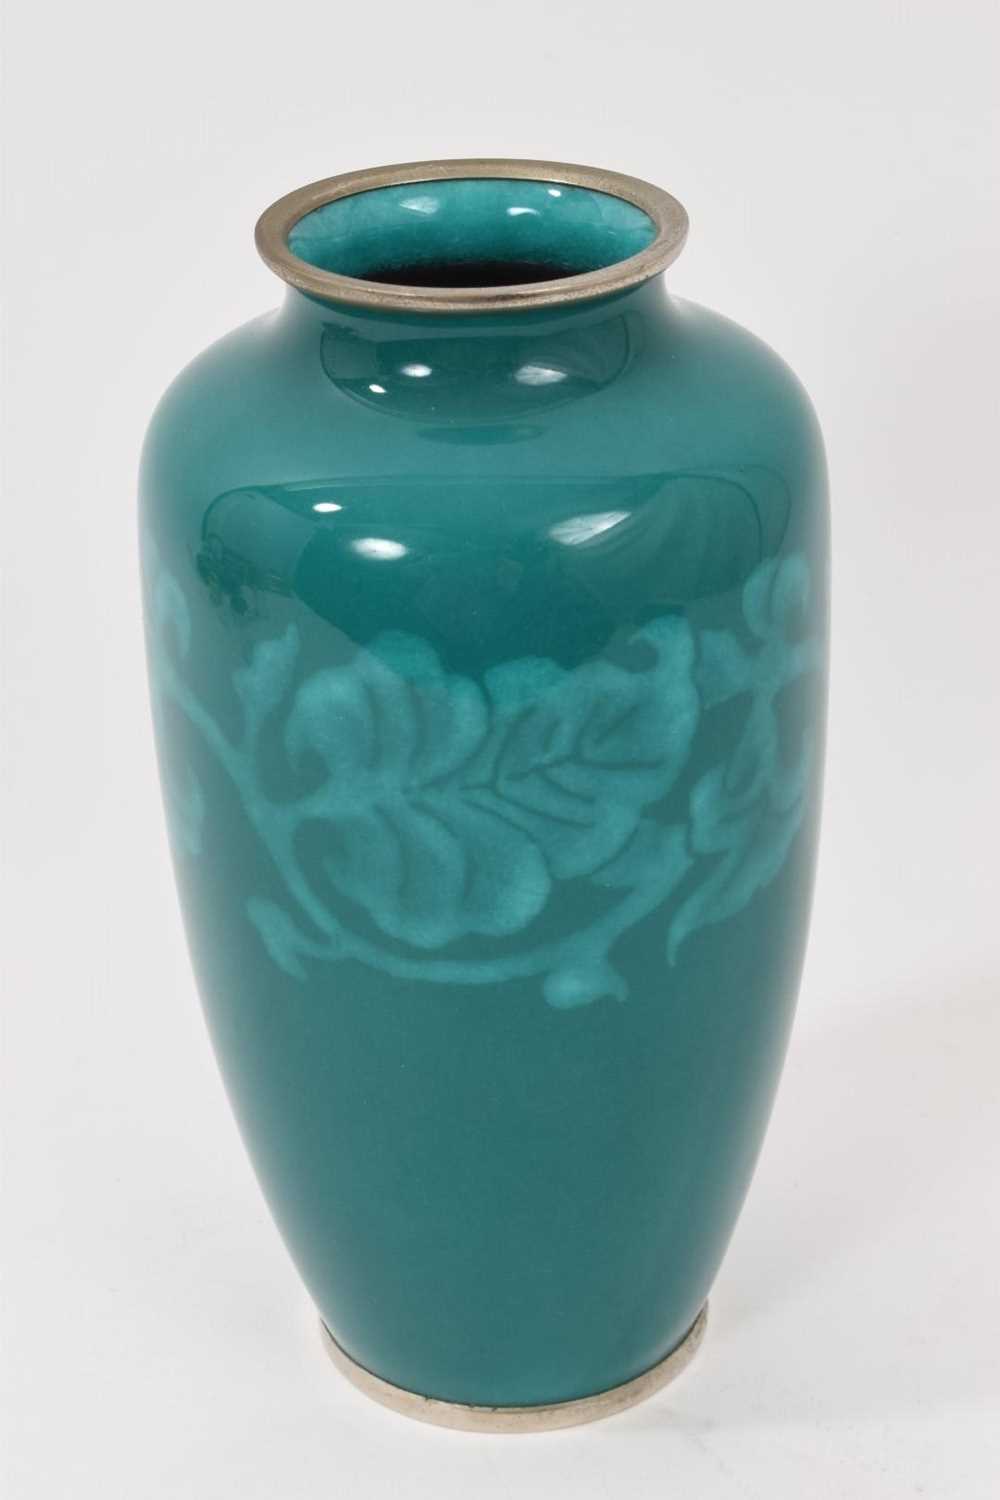 Japanese enamel green ground vase stamped Sato